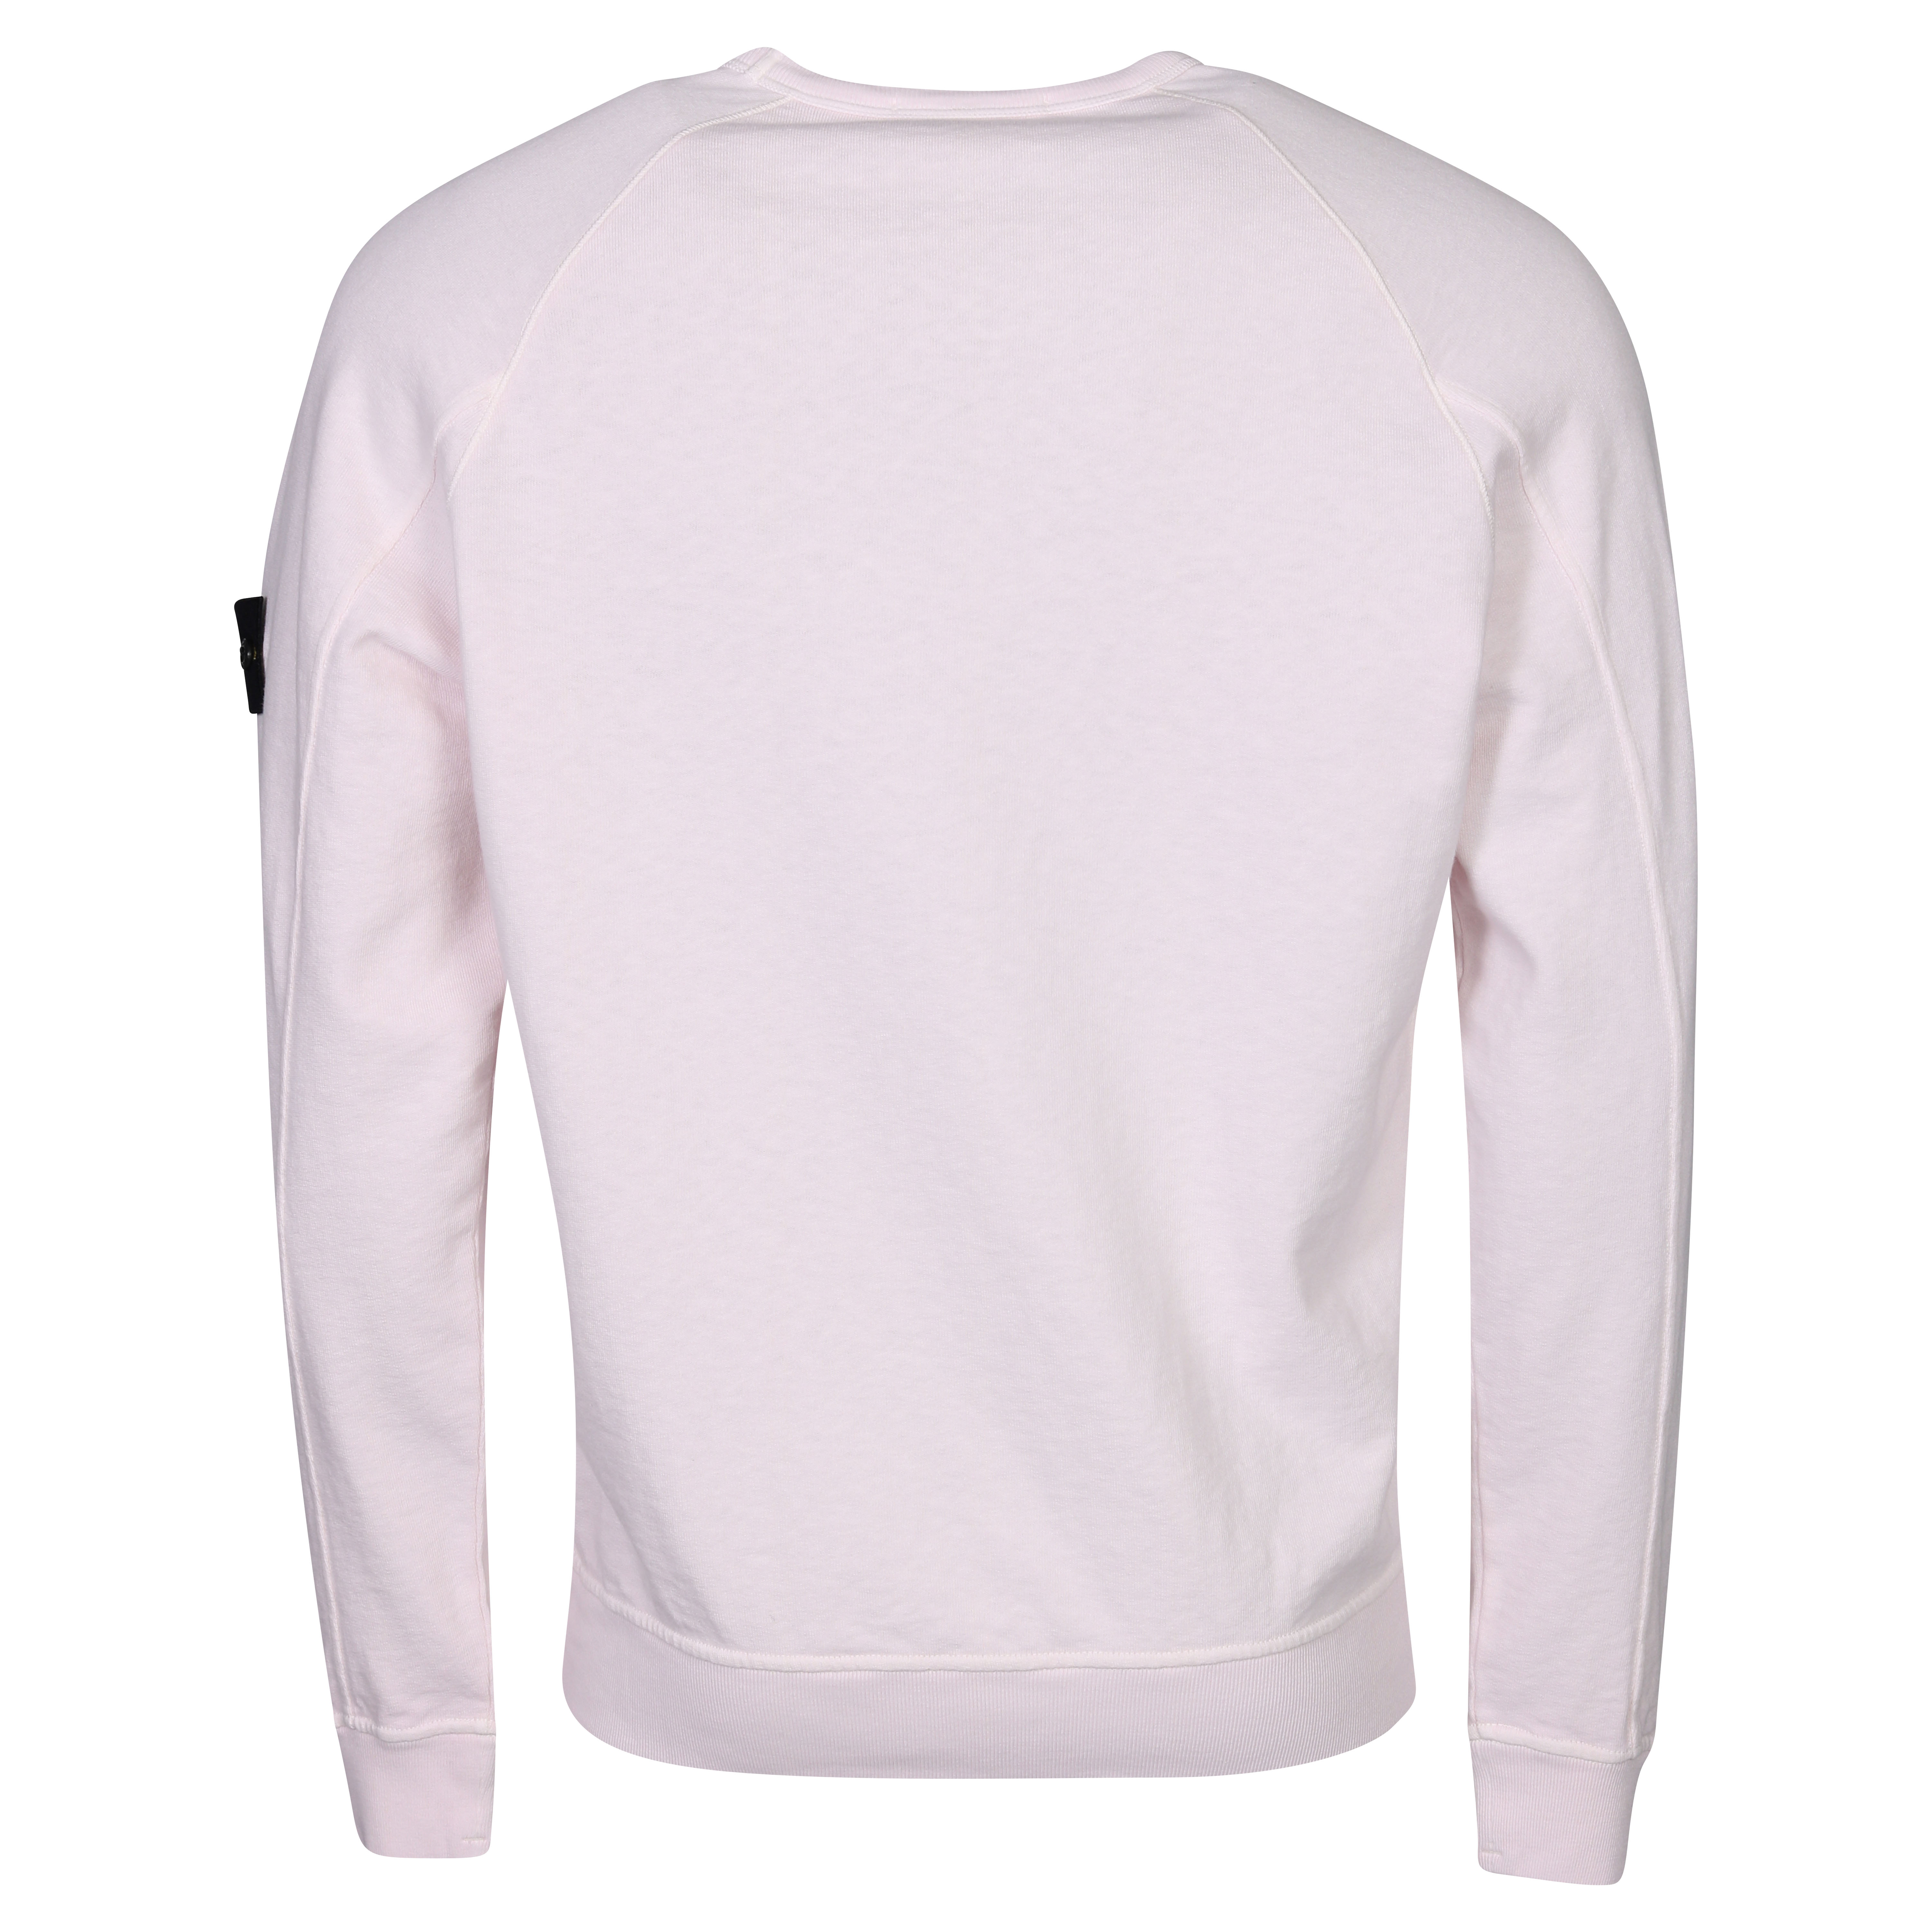 Stone Island Sweatshirt in Washed Light Pink 2XL